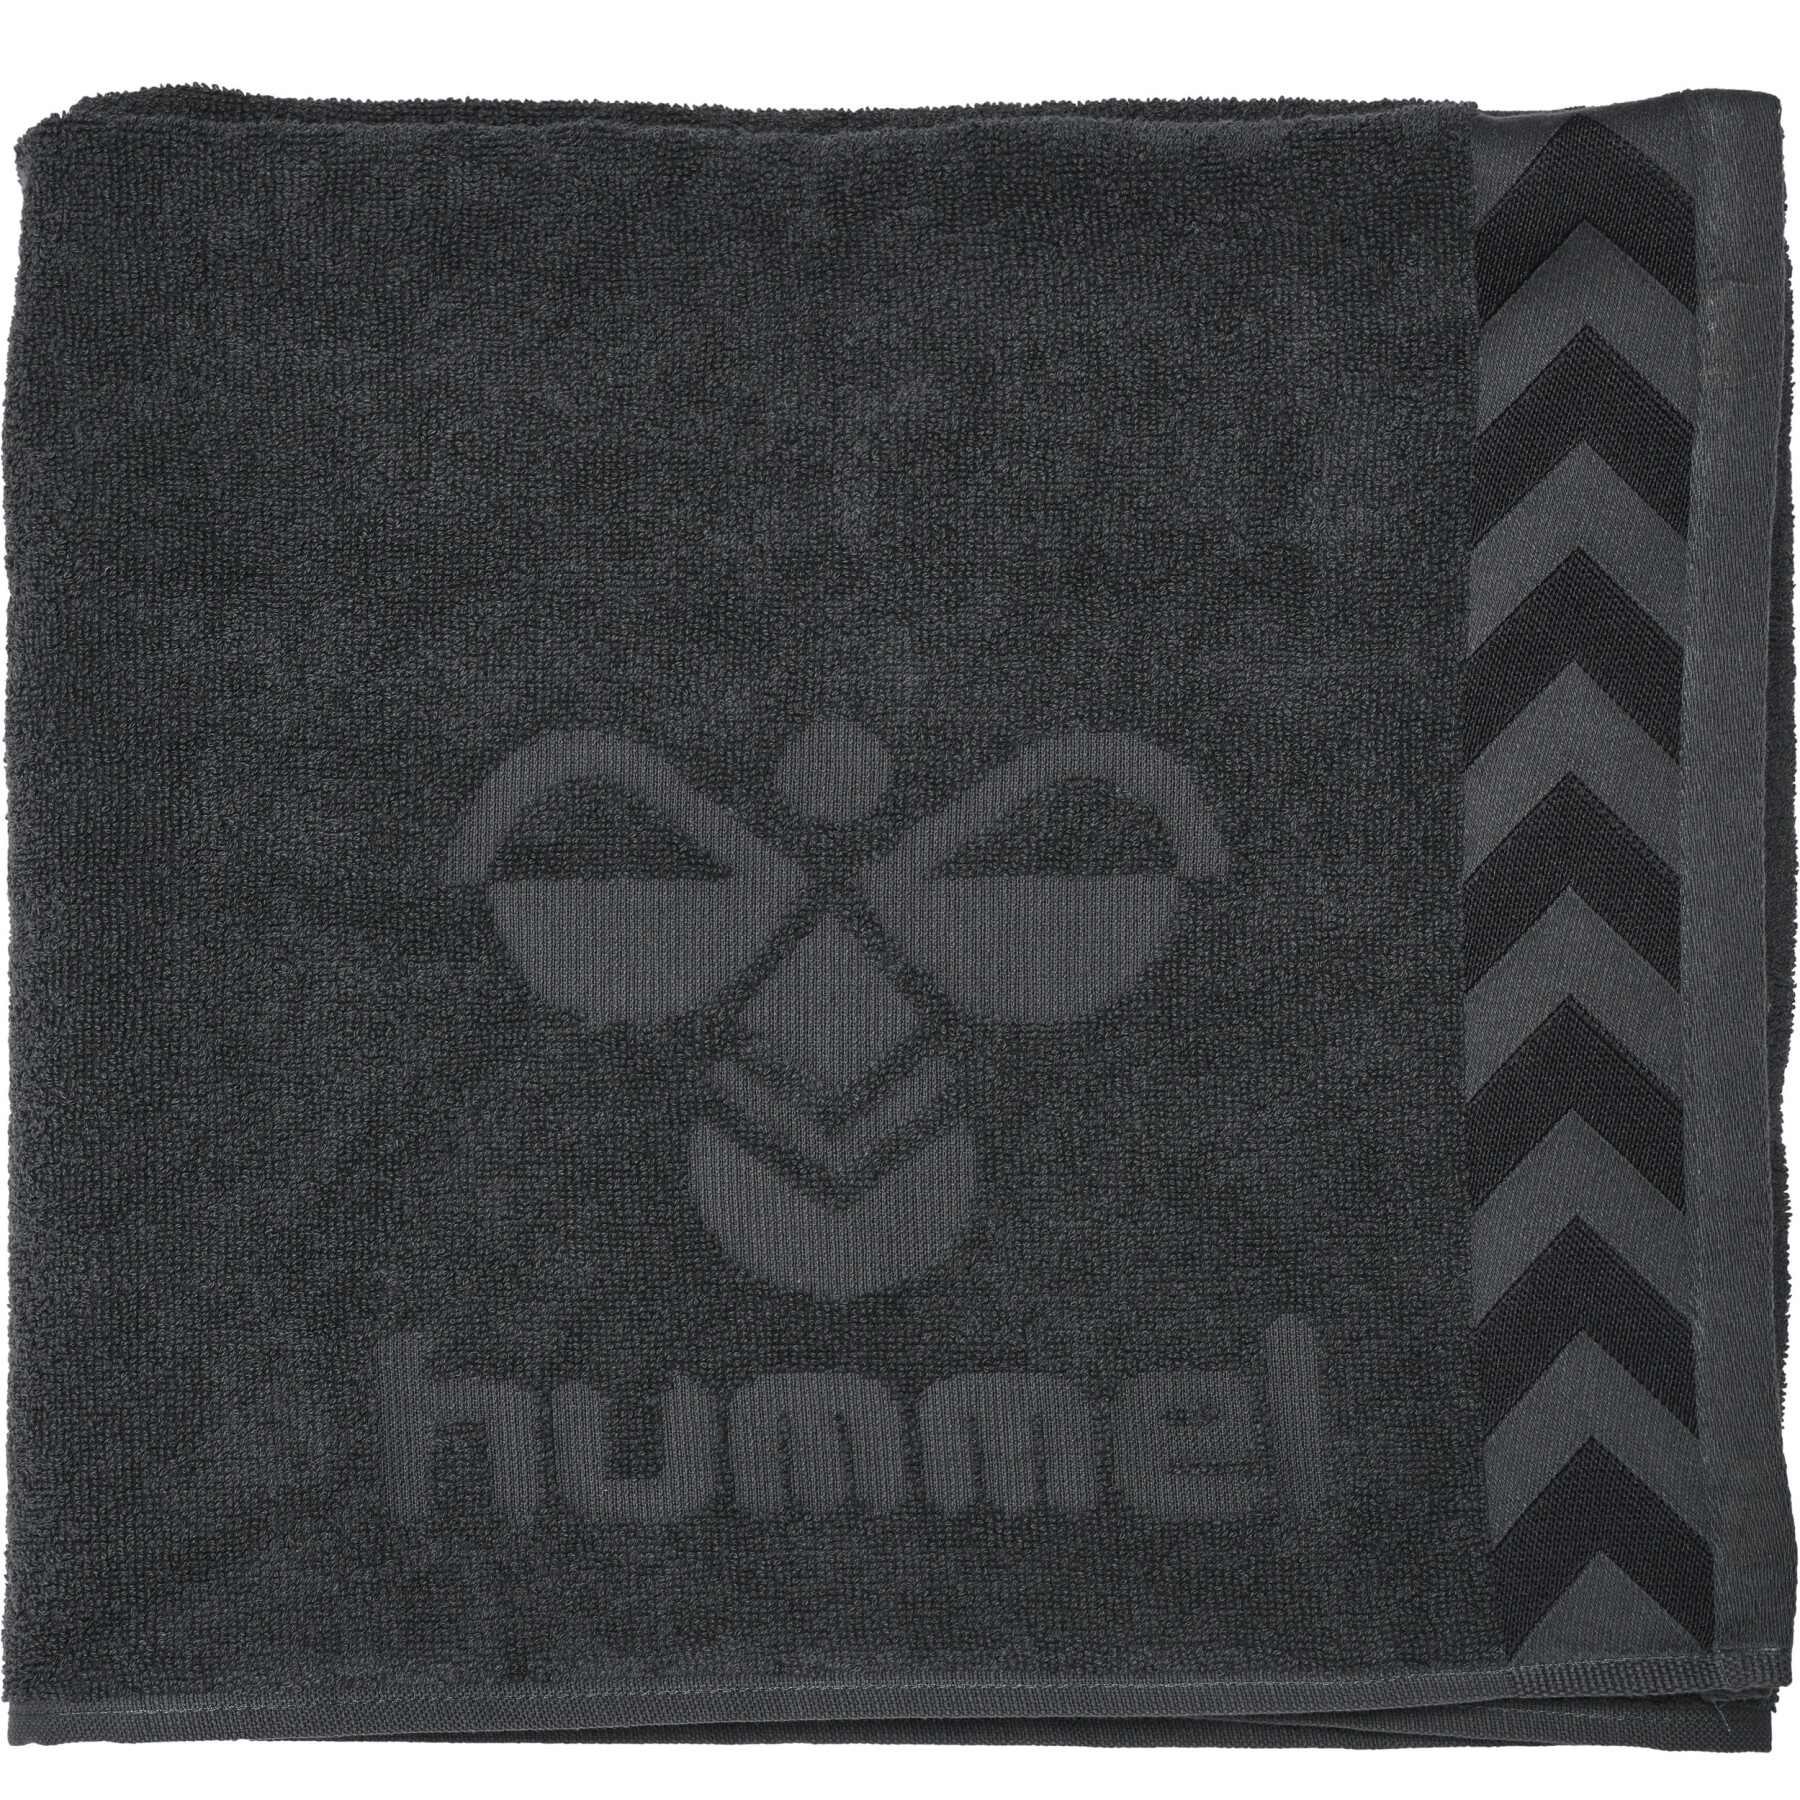 Towel Hummel Old School 160x70 cm